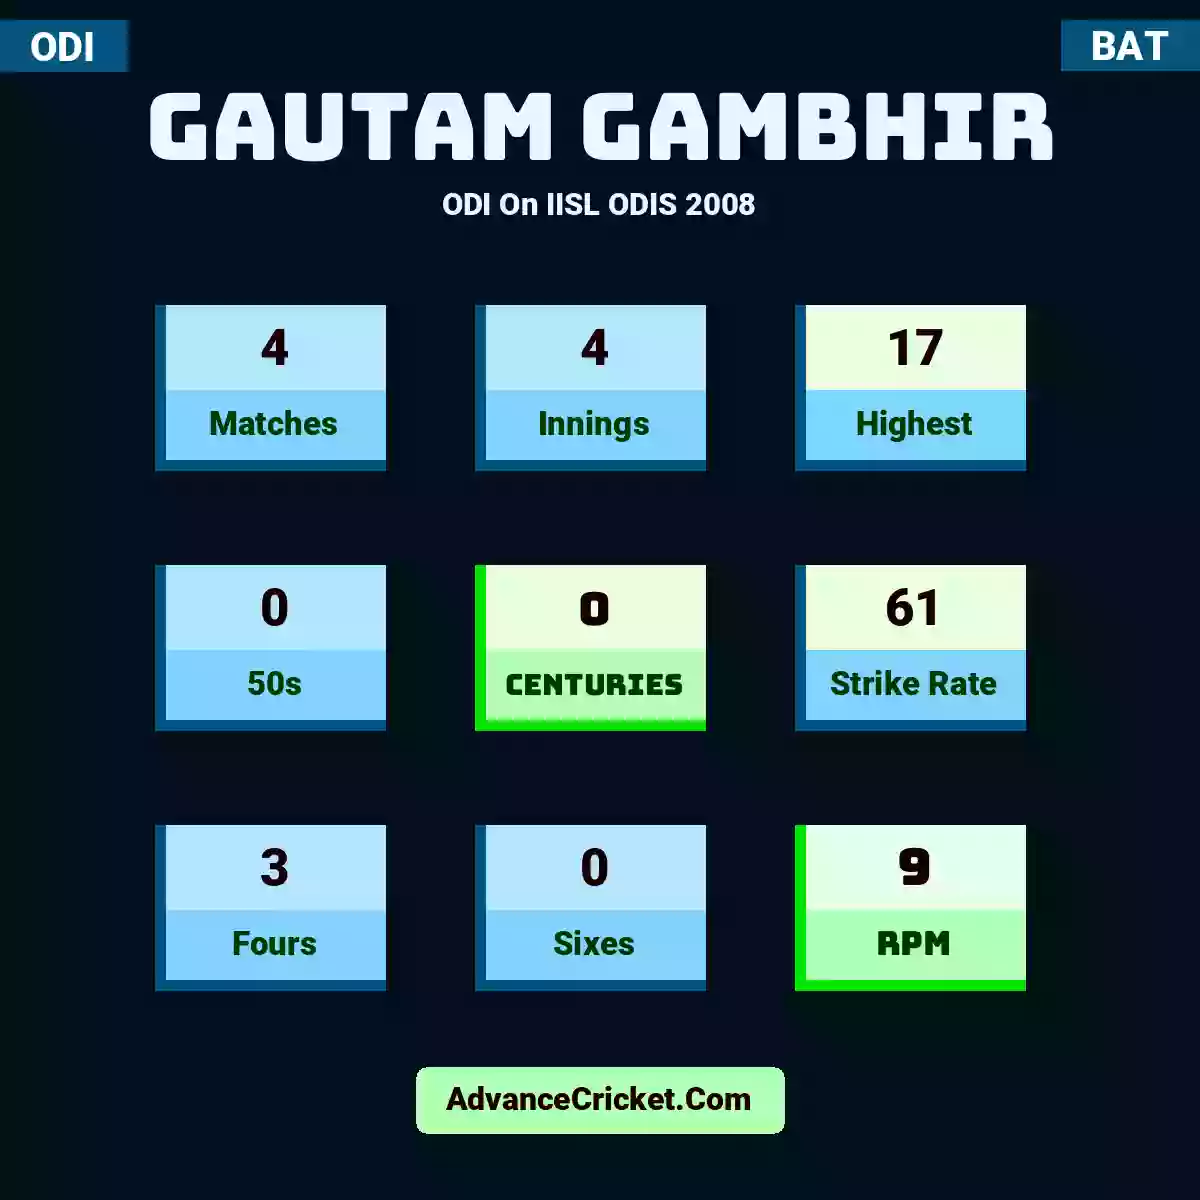 Gautam Gambhir ODI  On IISL ODIS 2008, Gautam Gambhir played 4 matches, scored 17 runs as highest, 0 half-centuries, and 0 centuries, with a strike rate of 61. G.Gambhir hit 3 fours and 0 sixes, with an RPM of 9.